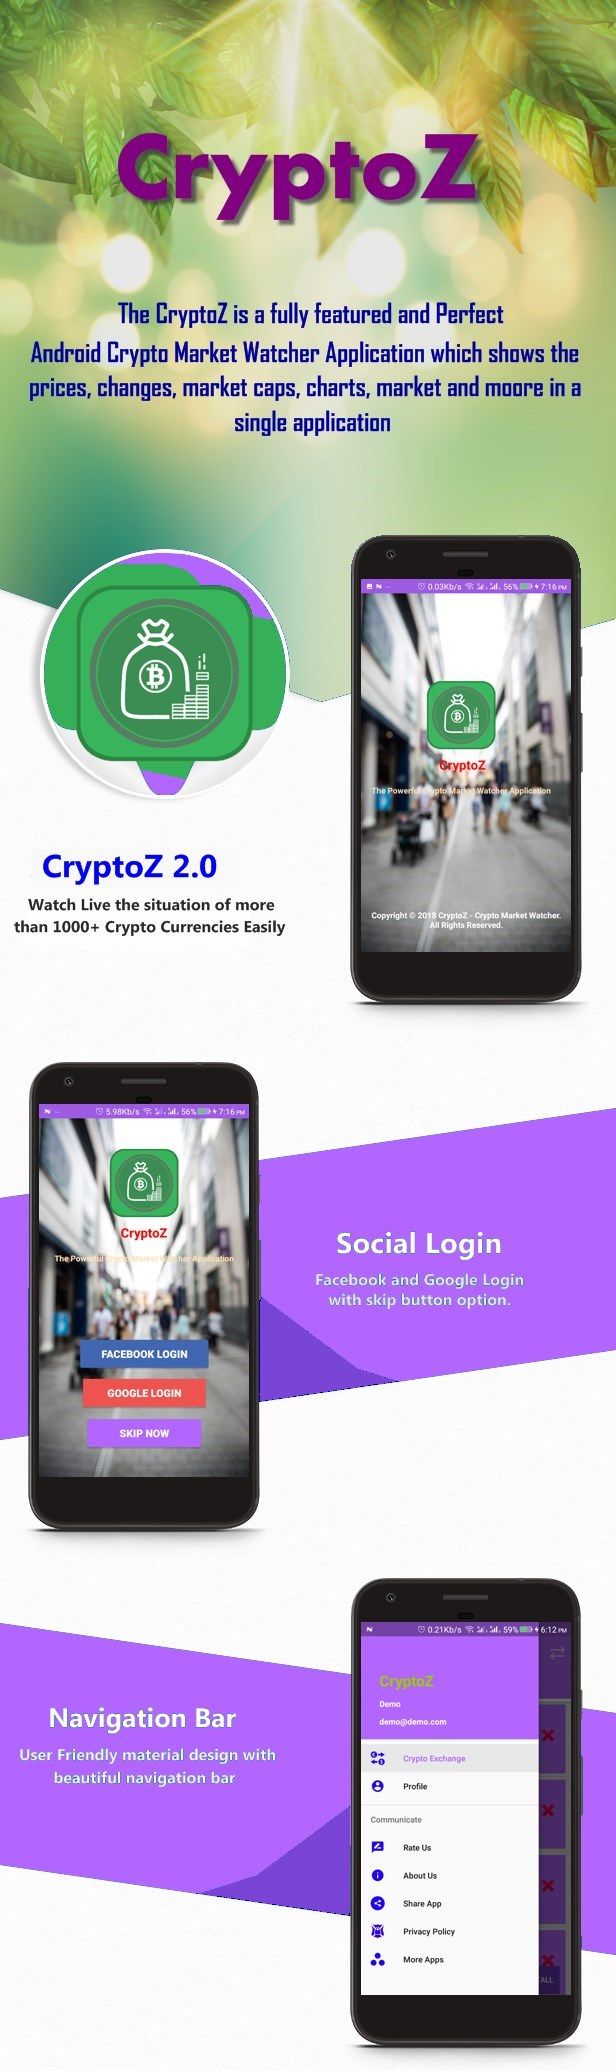 CryptoZ - Crypto Market Watcher | Android Studio Project | Admob Ads | Beautiful UI - 4